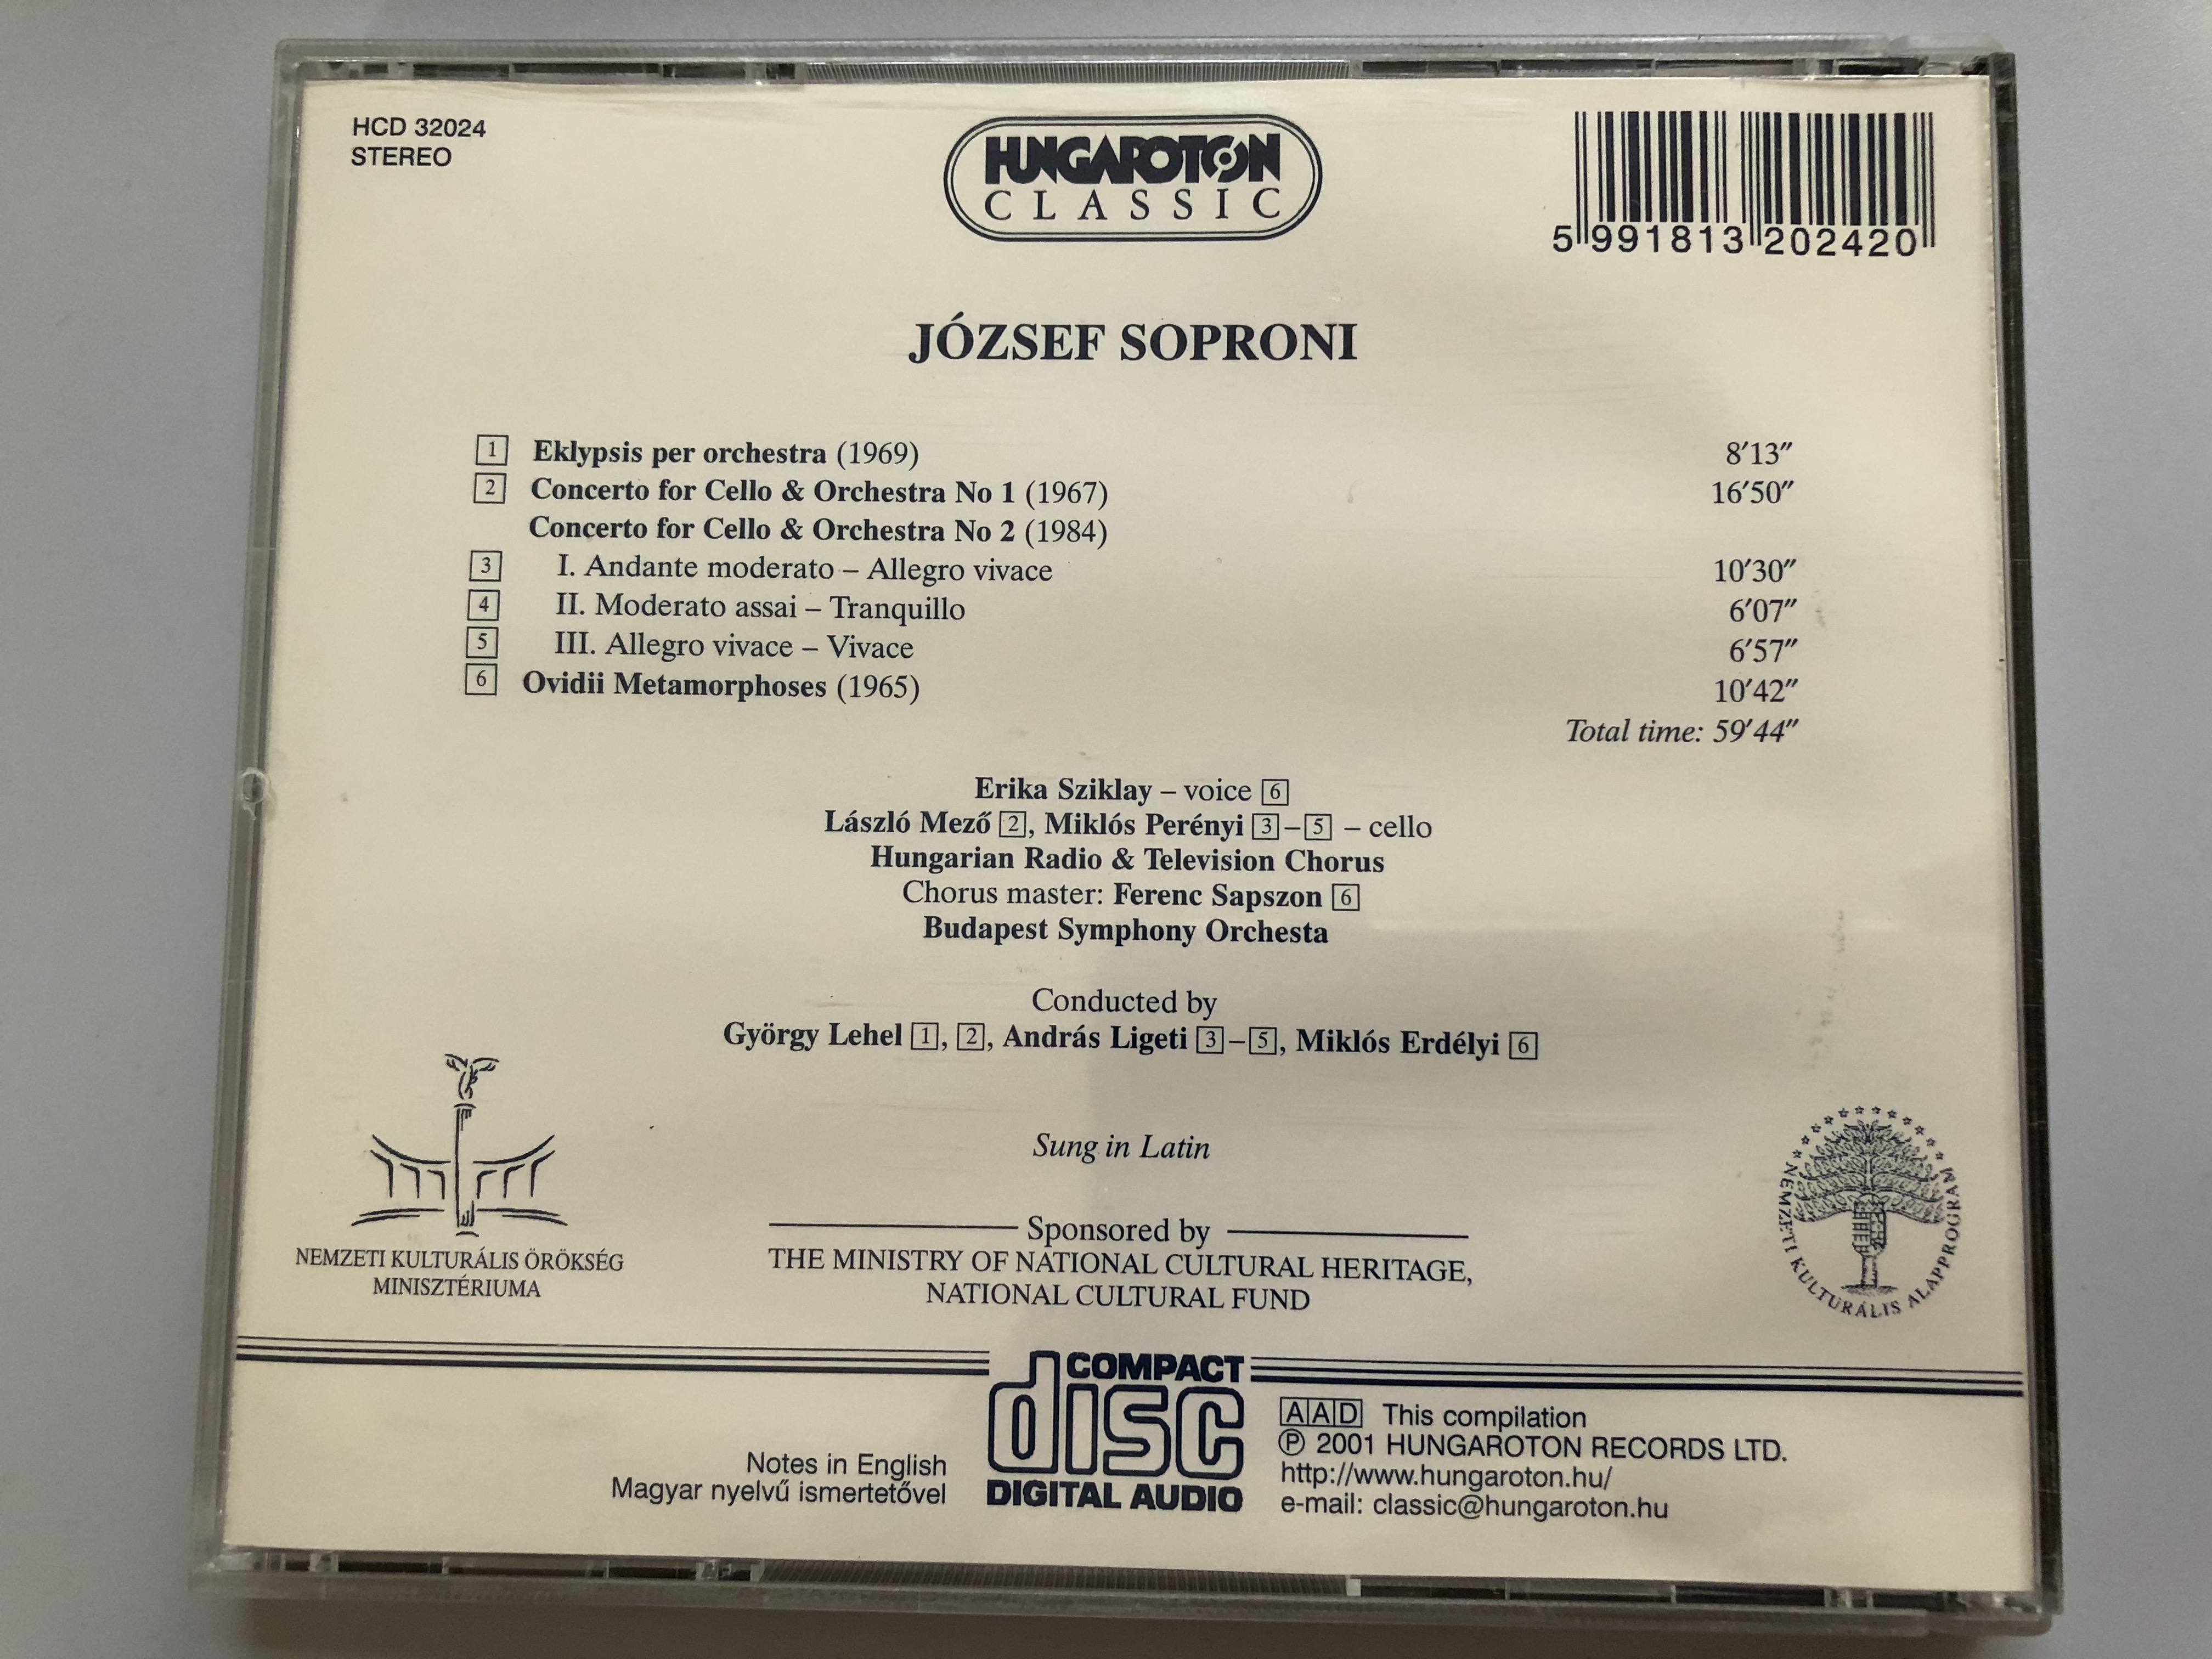 j-zsef-soproni-eklypsis-per-orchestra-concertos-for-cello-and-orchestra-nos-1-2-ovidii-metamorphoses-hungaroton-classic-audio-cd-2001-stereo-hcd-32024-7-.jpg